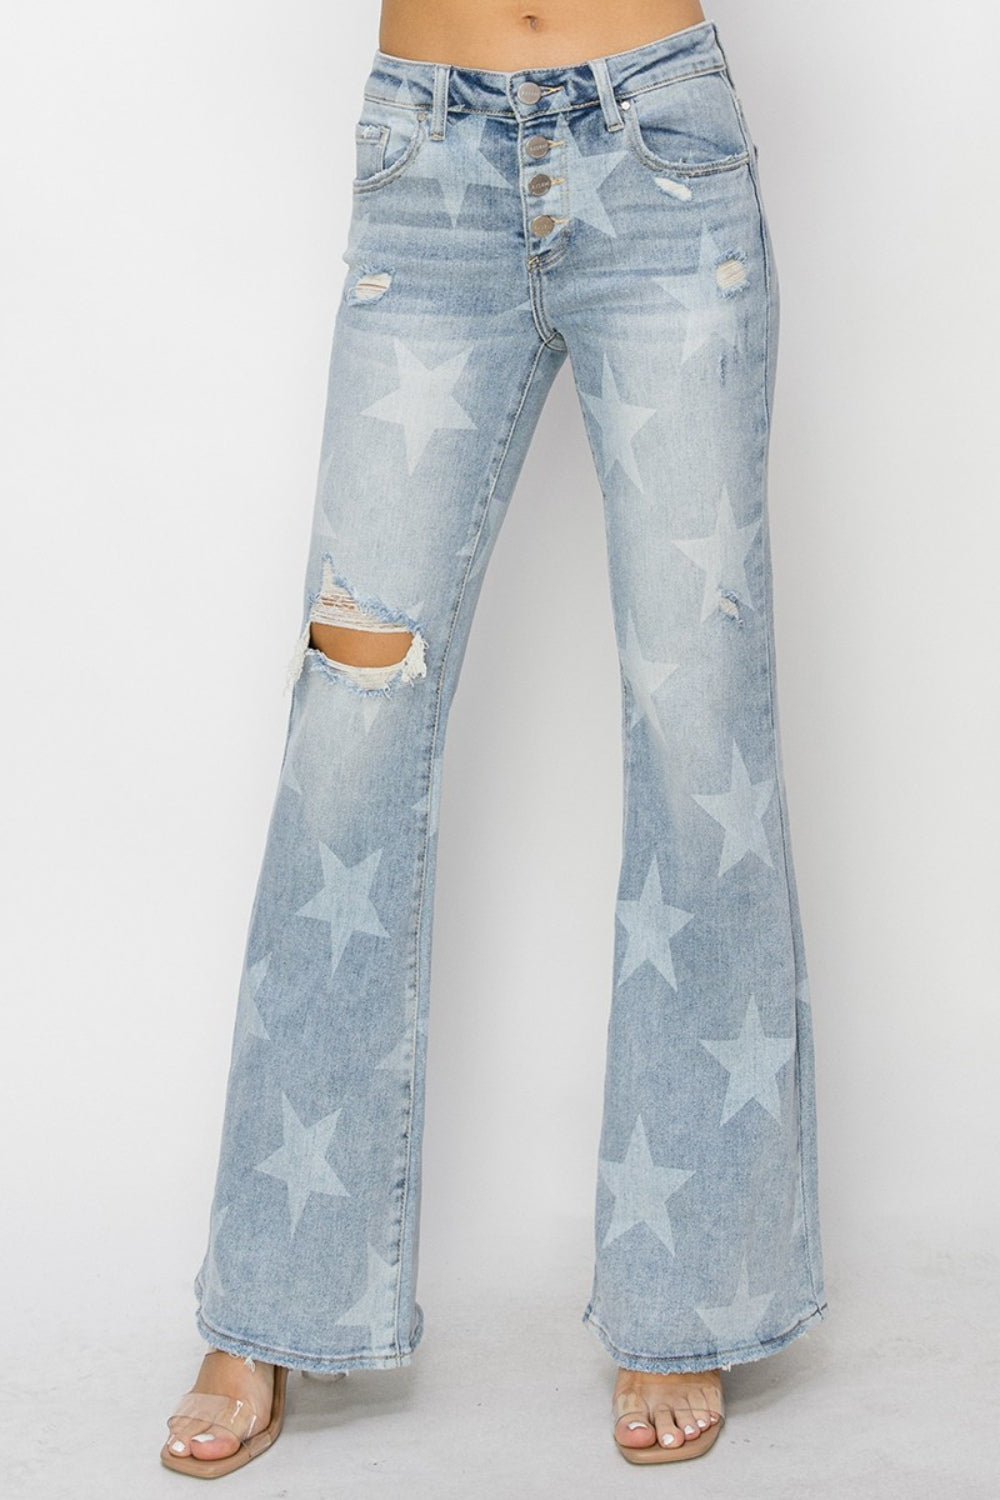 Equinox Star Print Jeans